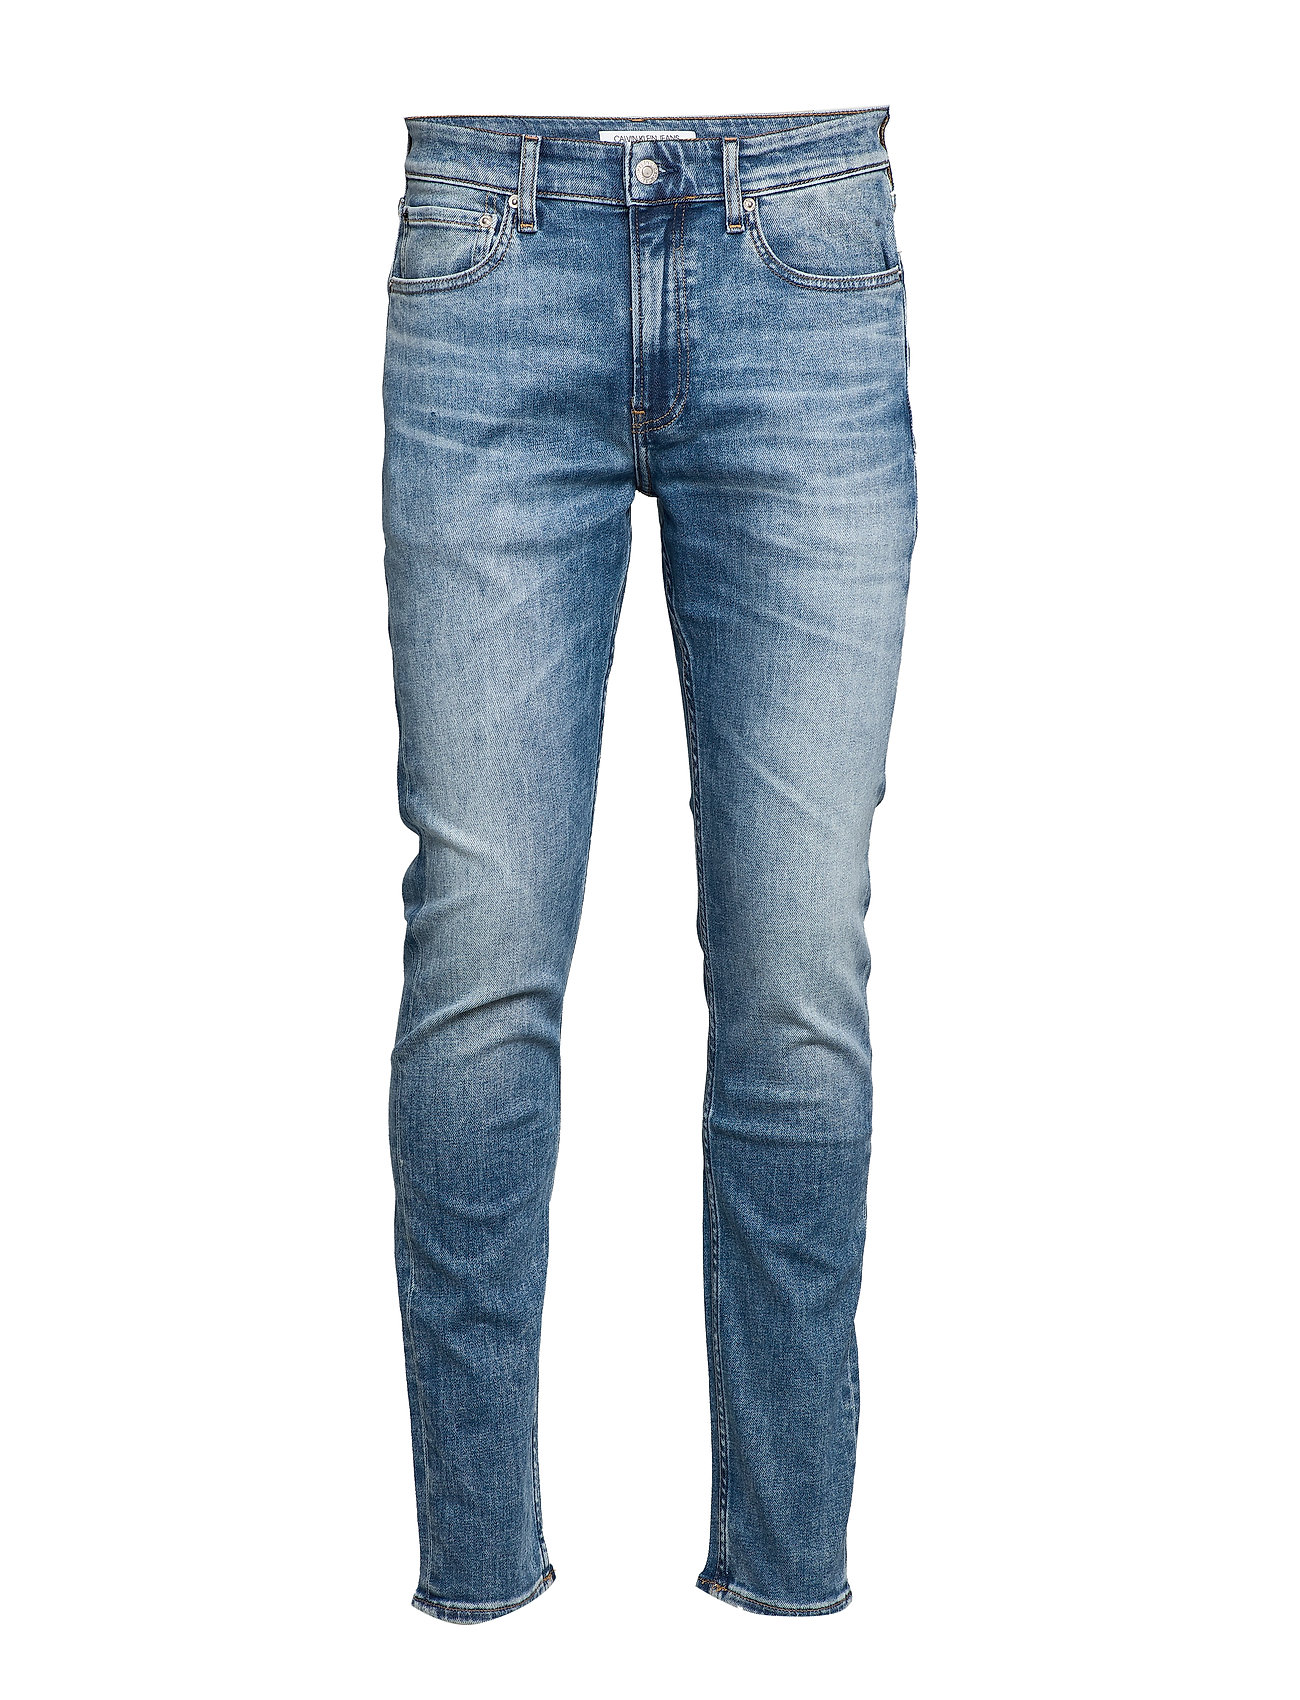 calvin klein outlet jeans